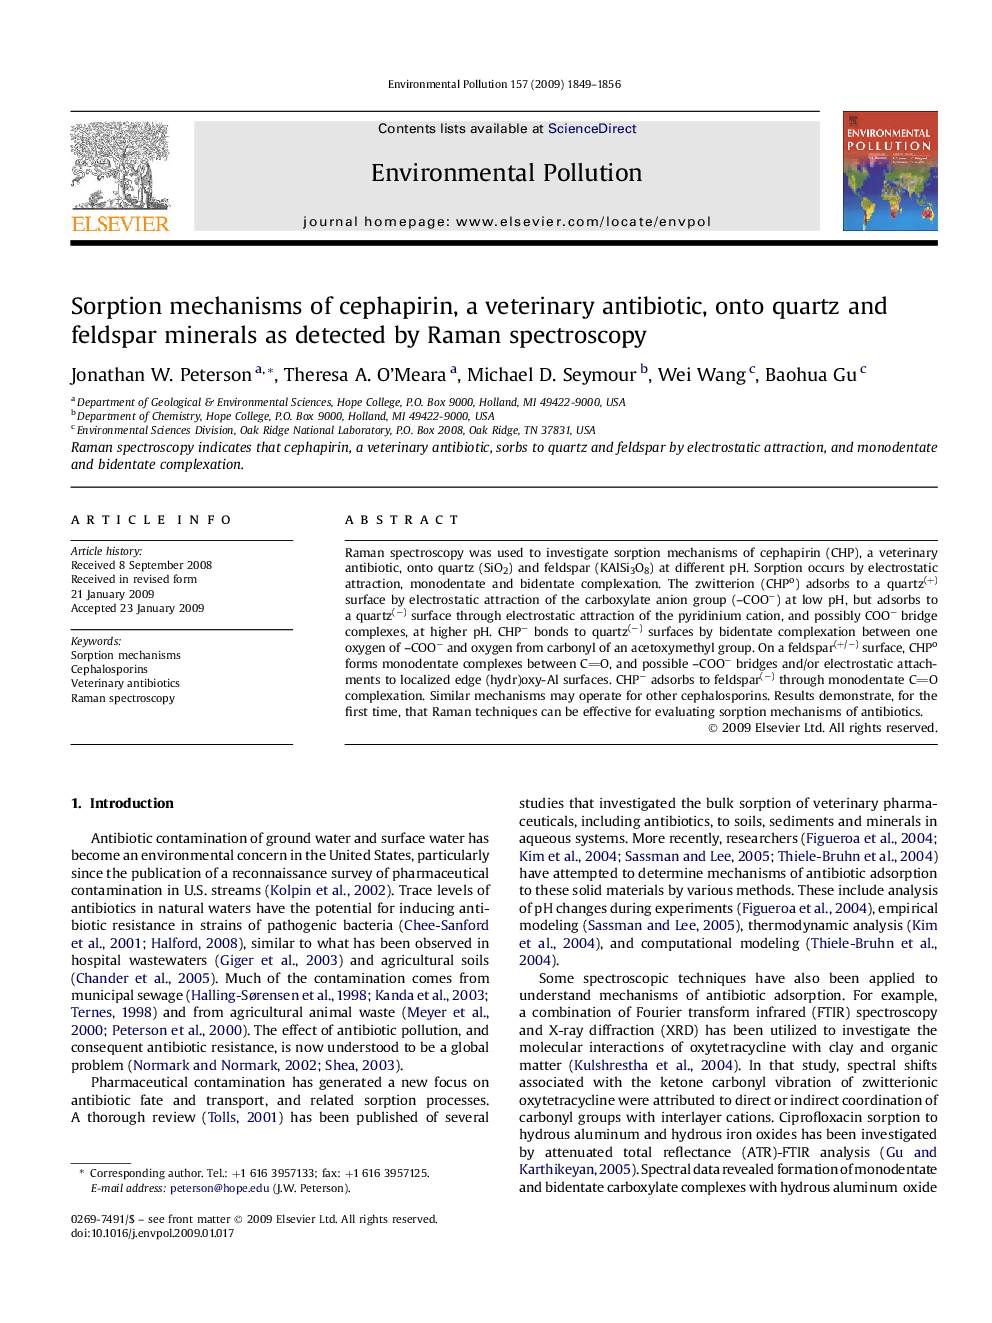 Sorption mechanisms of cephapirin, a veterinary antibiotic, onto quartz and feldspar minerals as detected by Raman spectroscopy